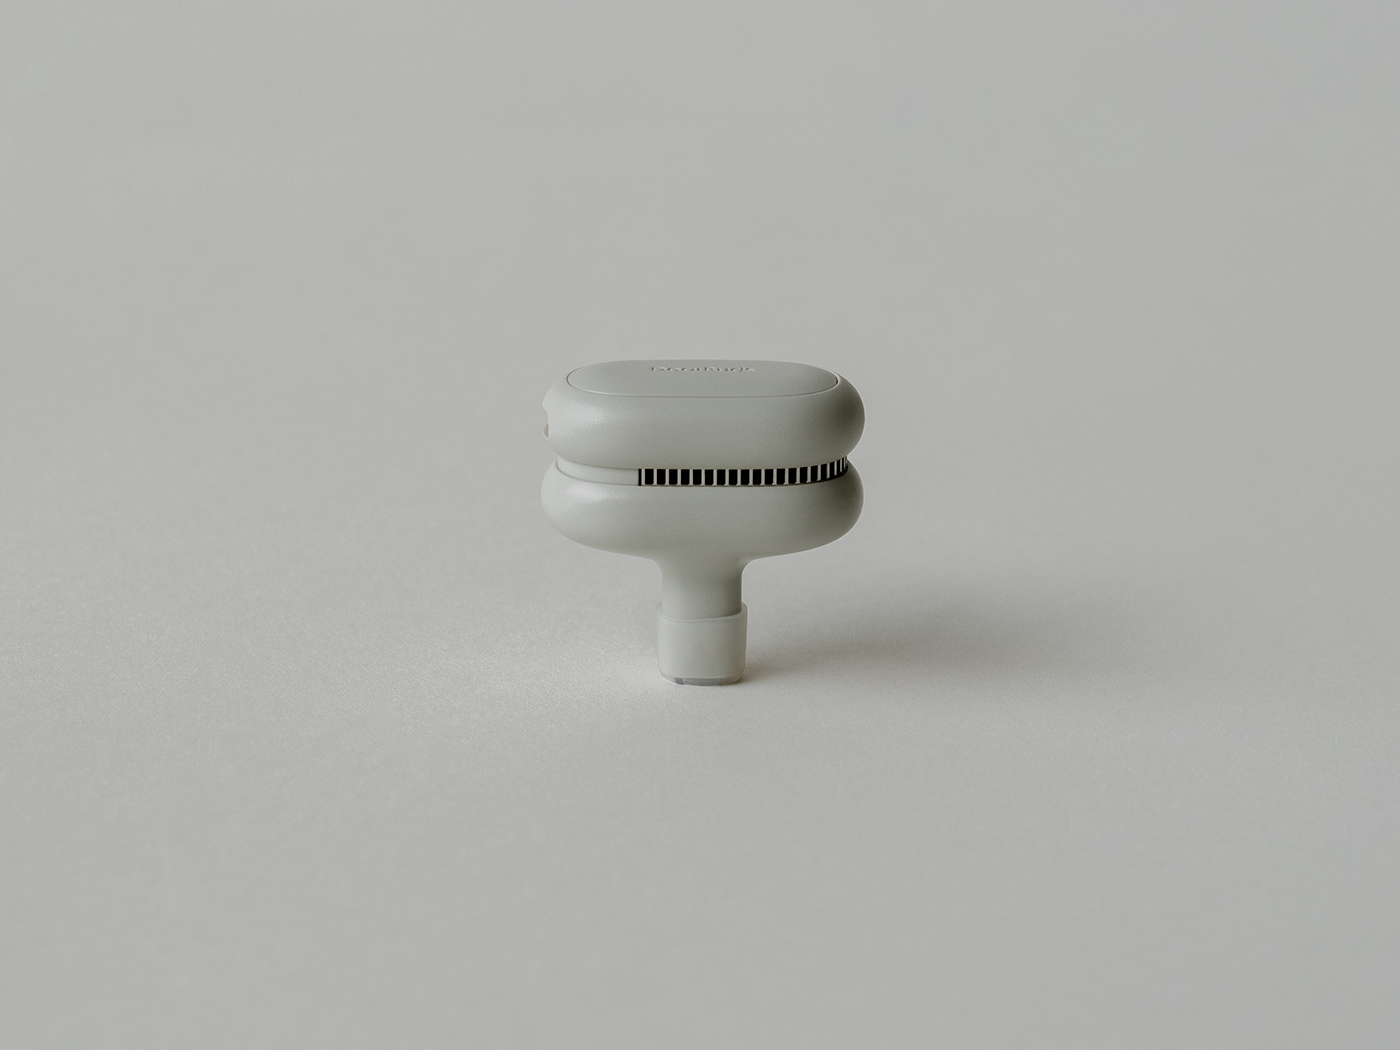 Wearable Dehumidifier earphones Earbuds medical device healthcare industrial design  product design  bebop ear dehumidifier